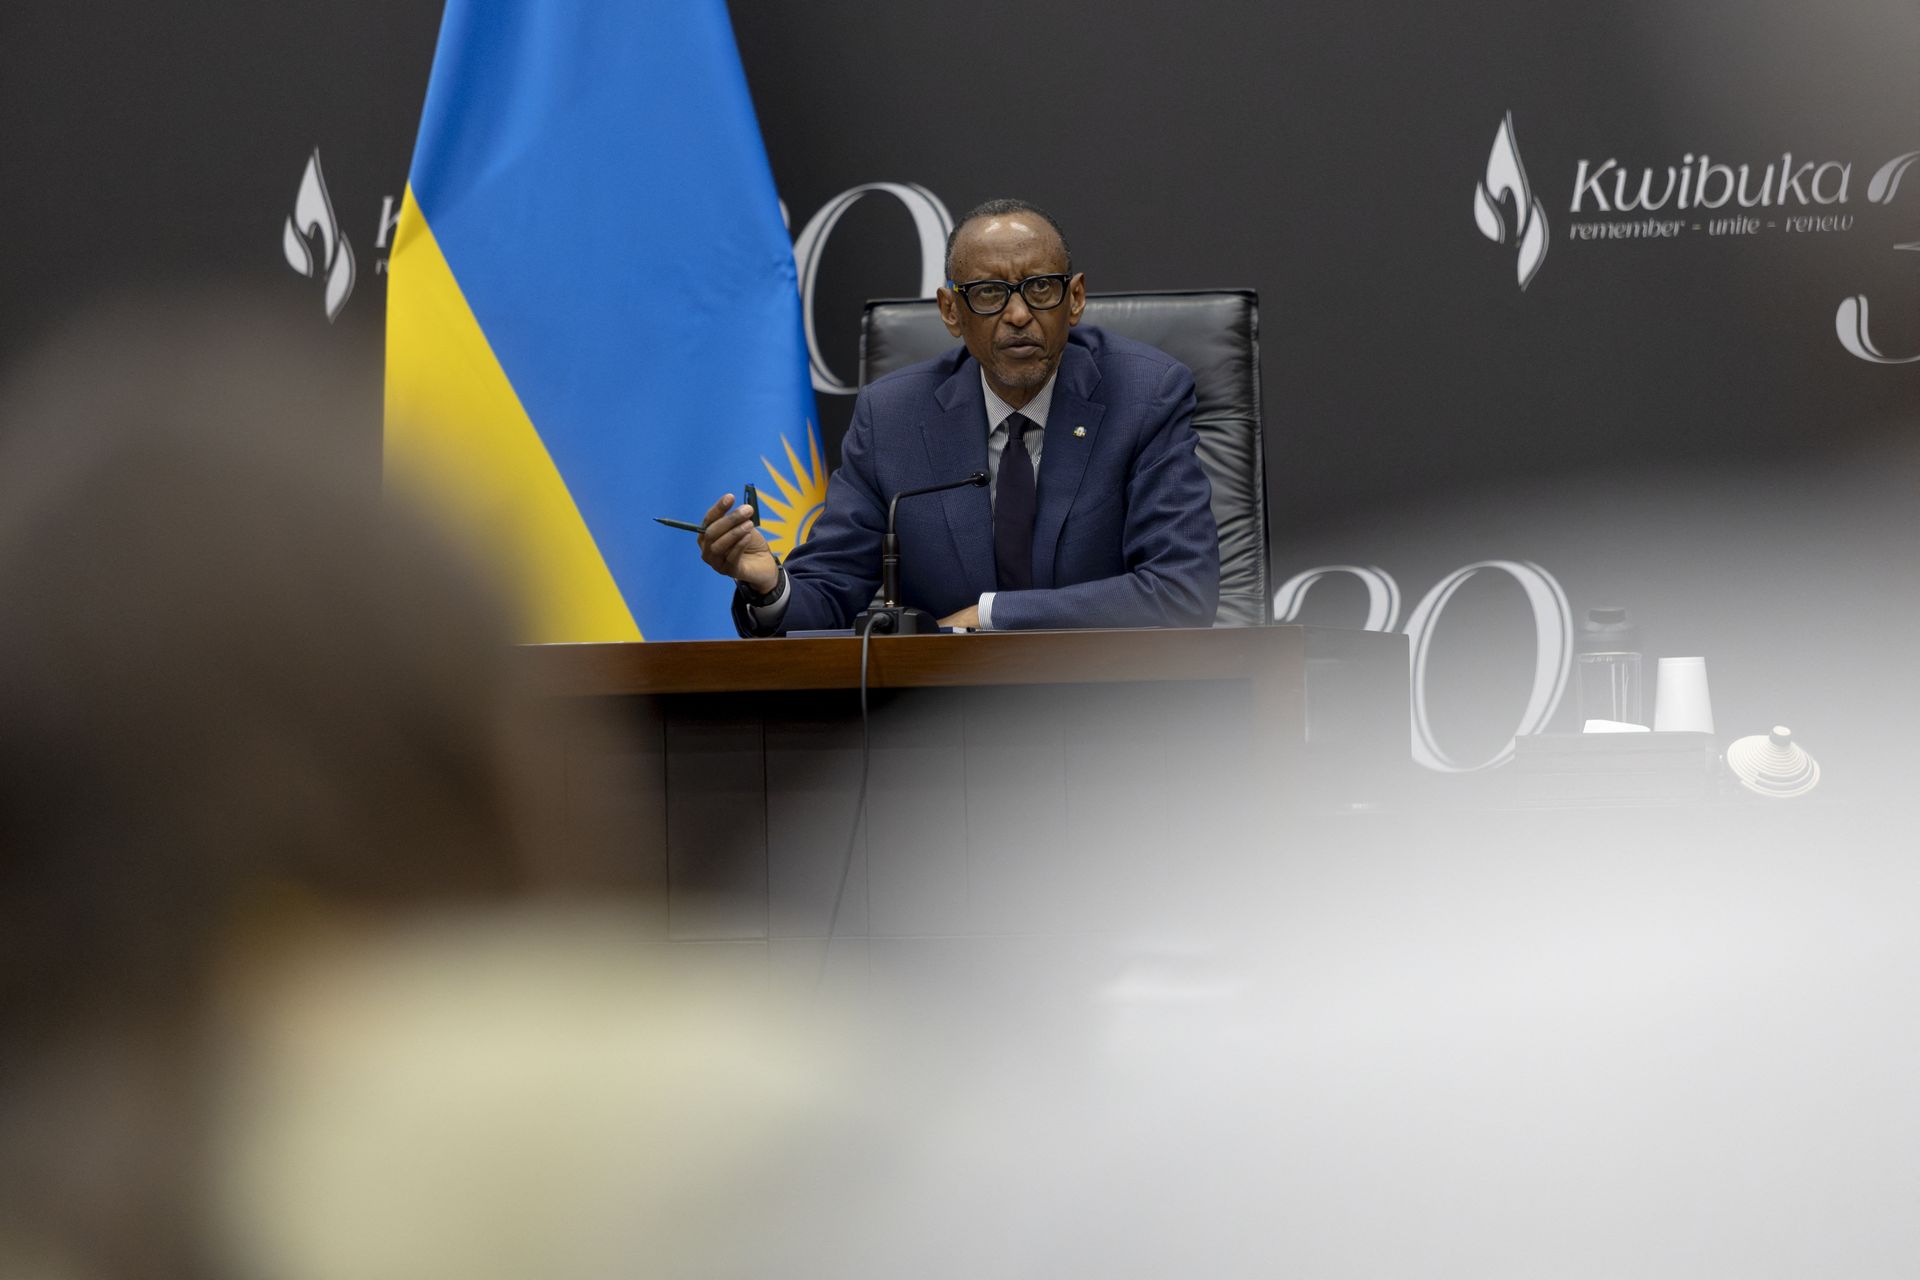 The confidence of the Rwandan authorities